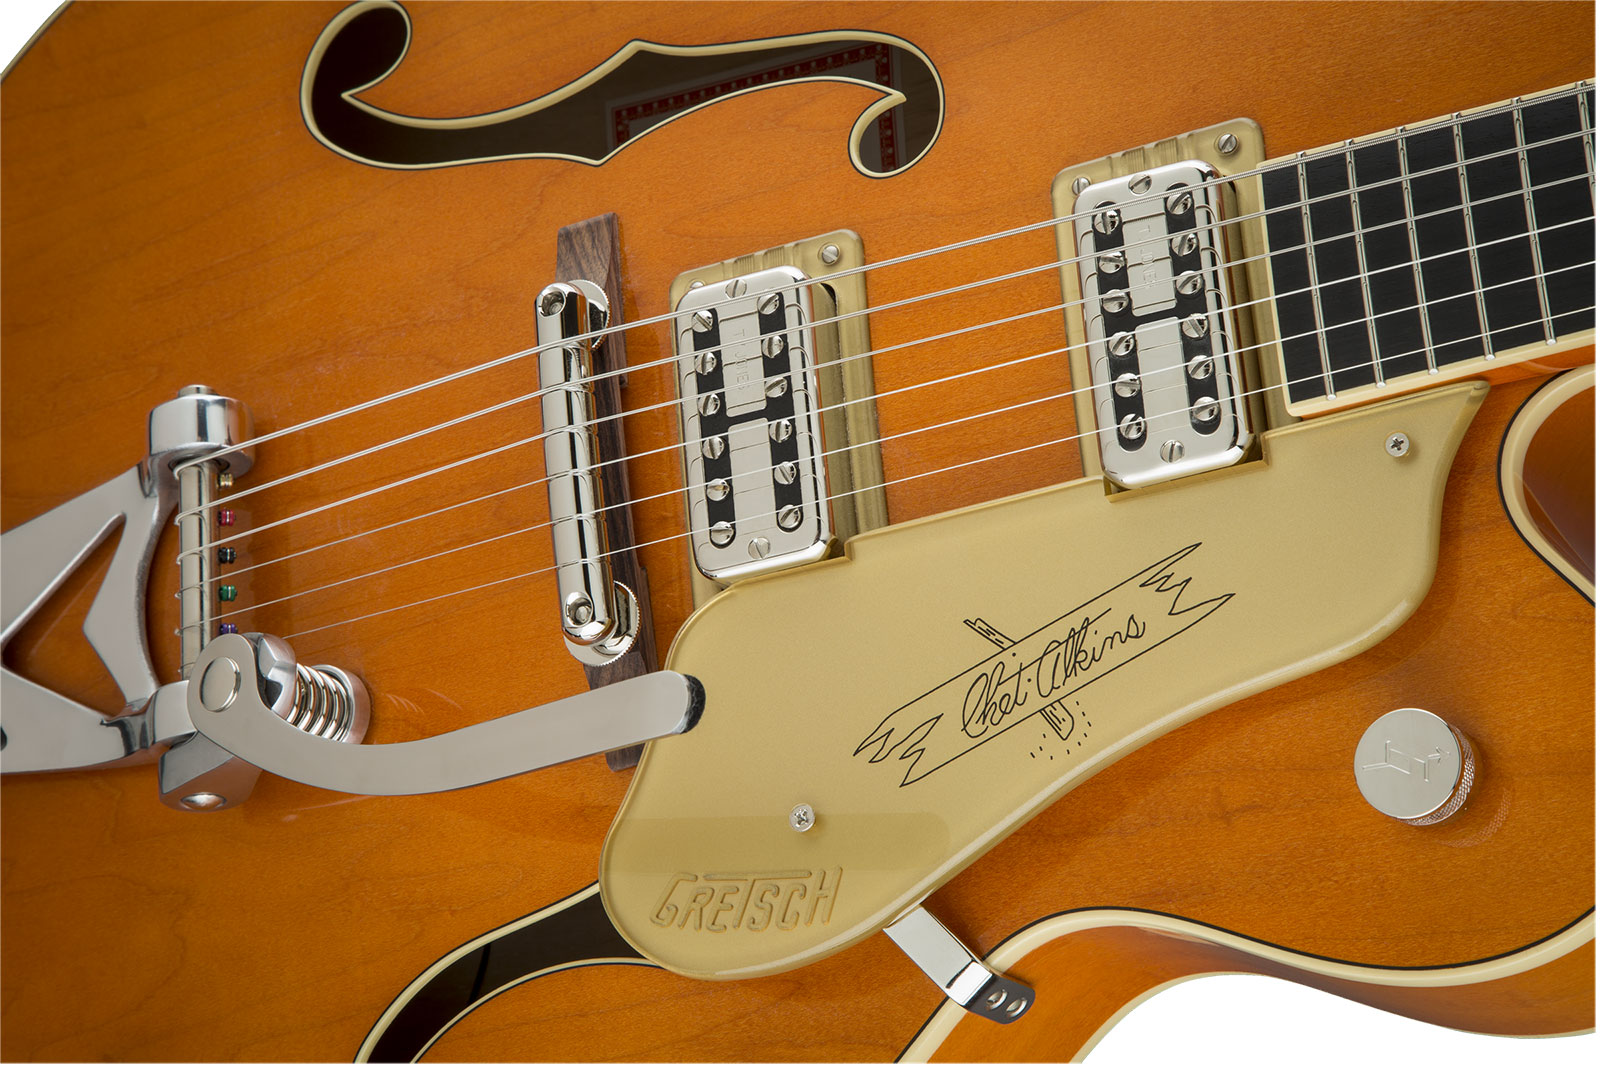 Gretsch Chet Atkins G6120t-59 Vintage Select 1959 Bigsby Pro Jap 2h Tv Jones Trem Eb - Vintage Orange Stain - Hollow-body electric guitar - Variation 